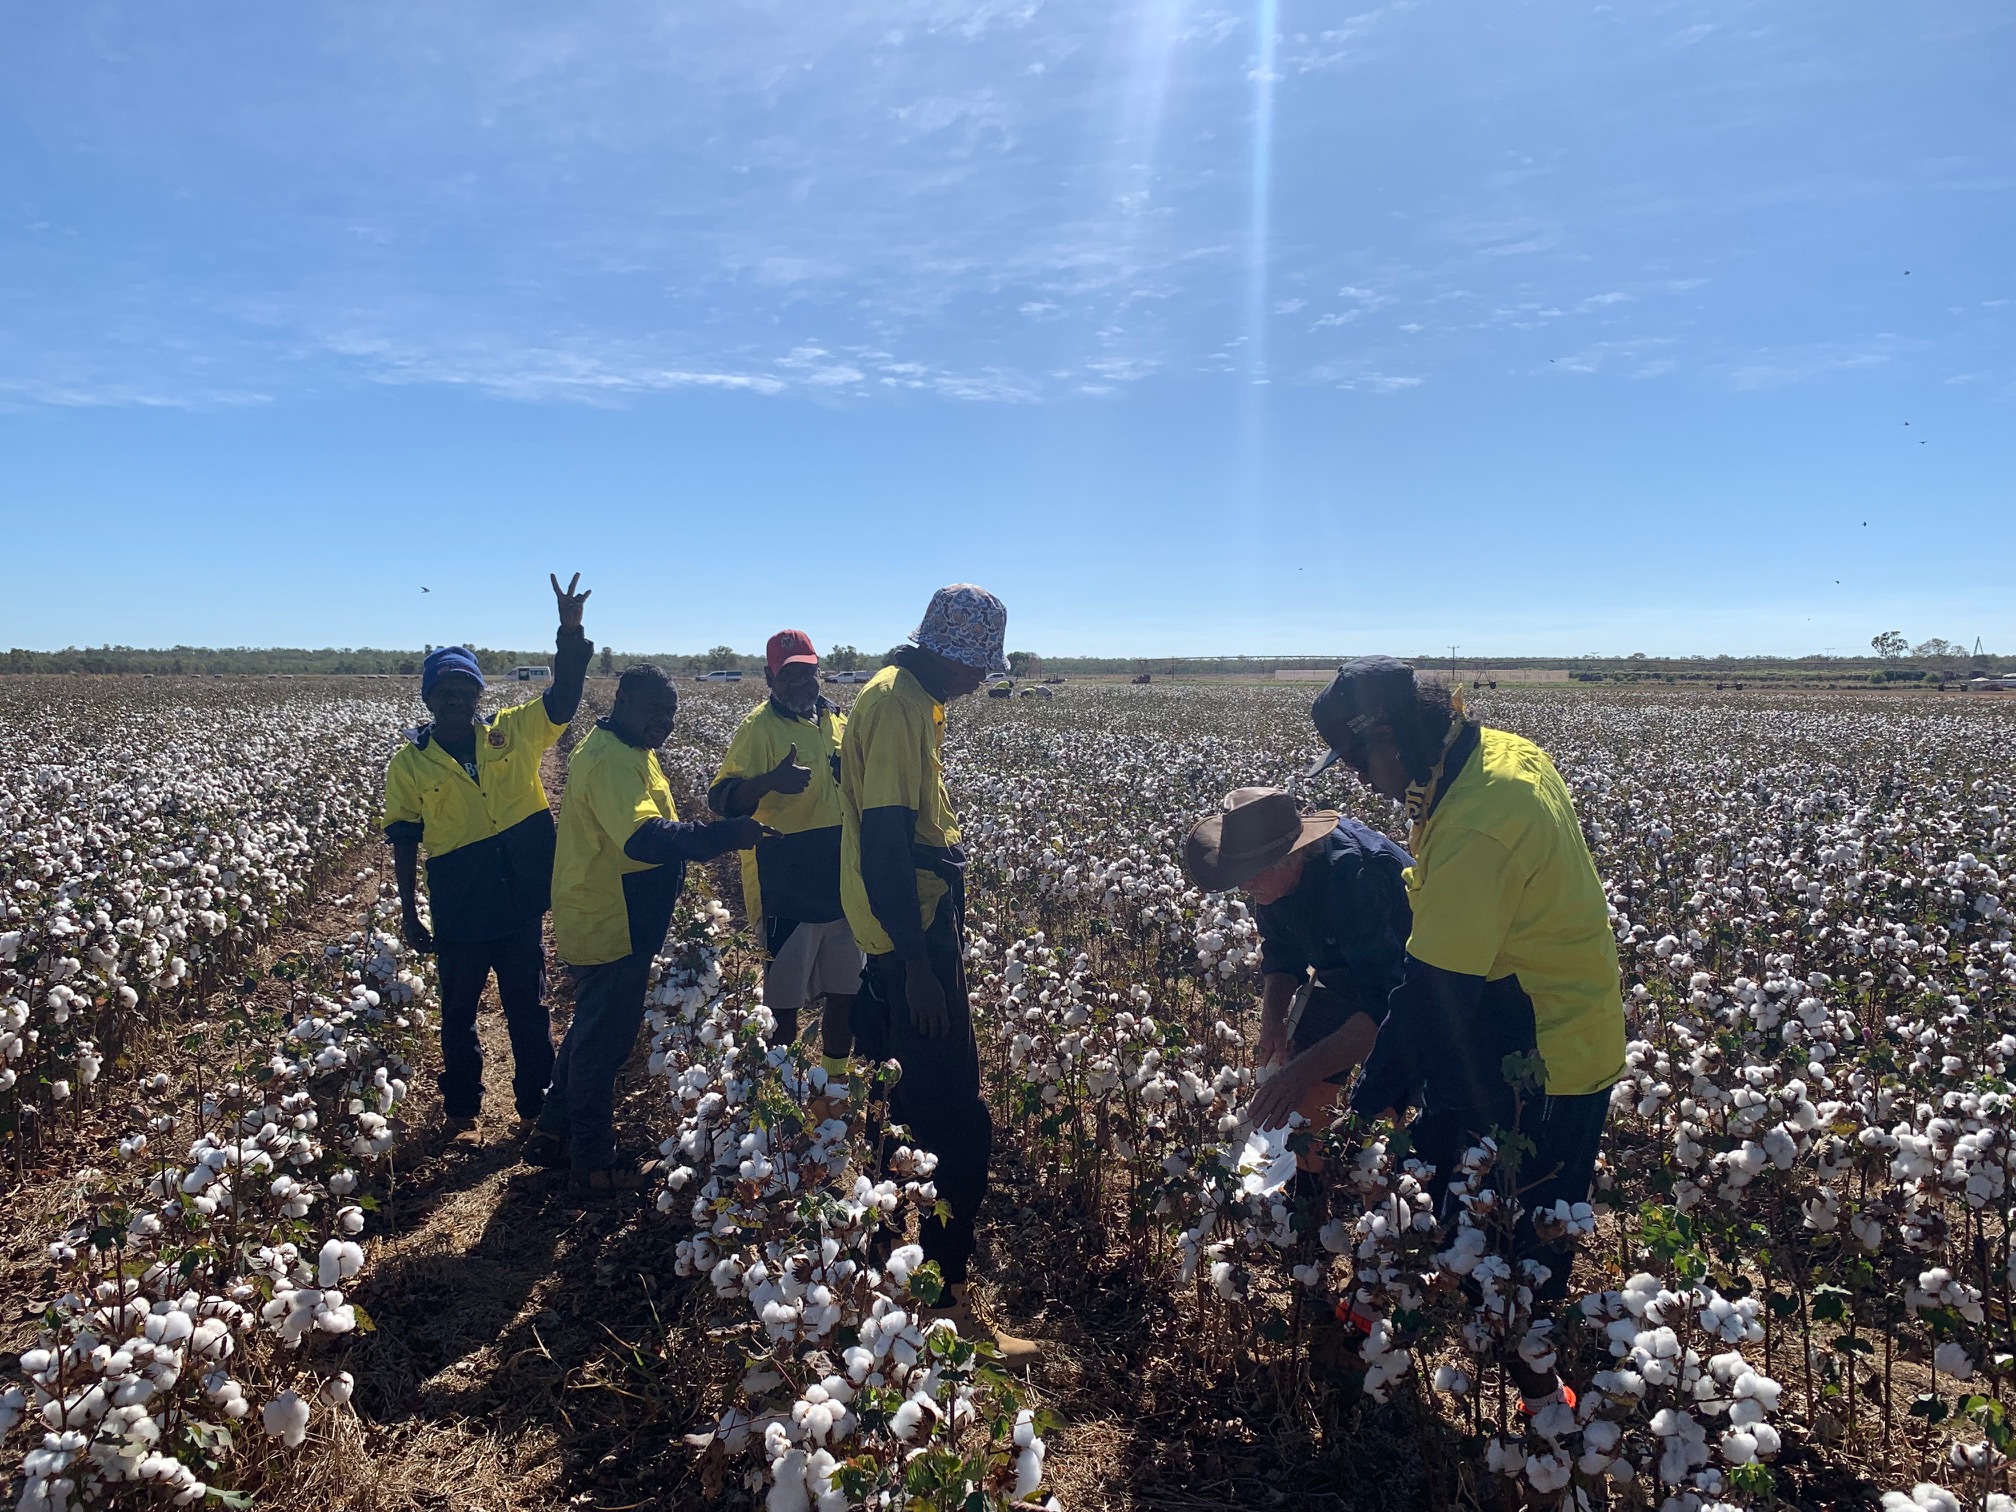 Beswick and Binjari Teams Participate in Cotton Growing Research 